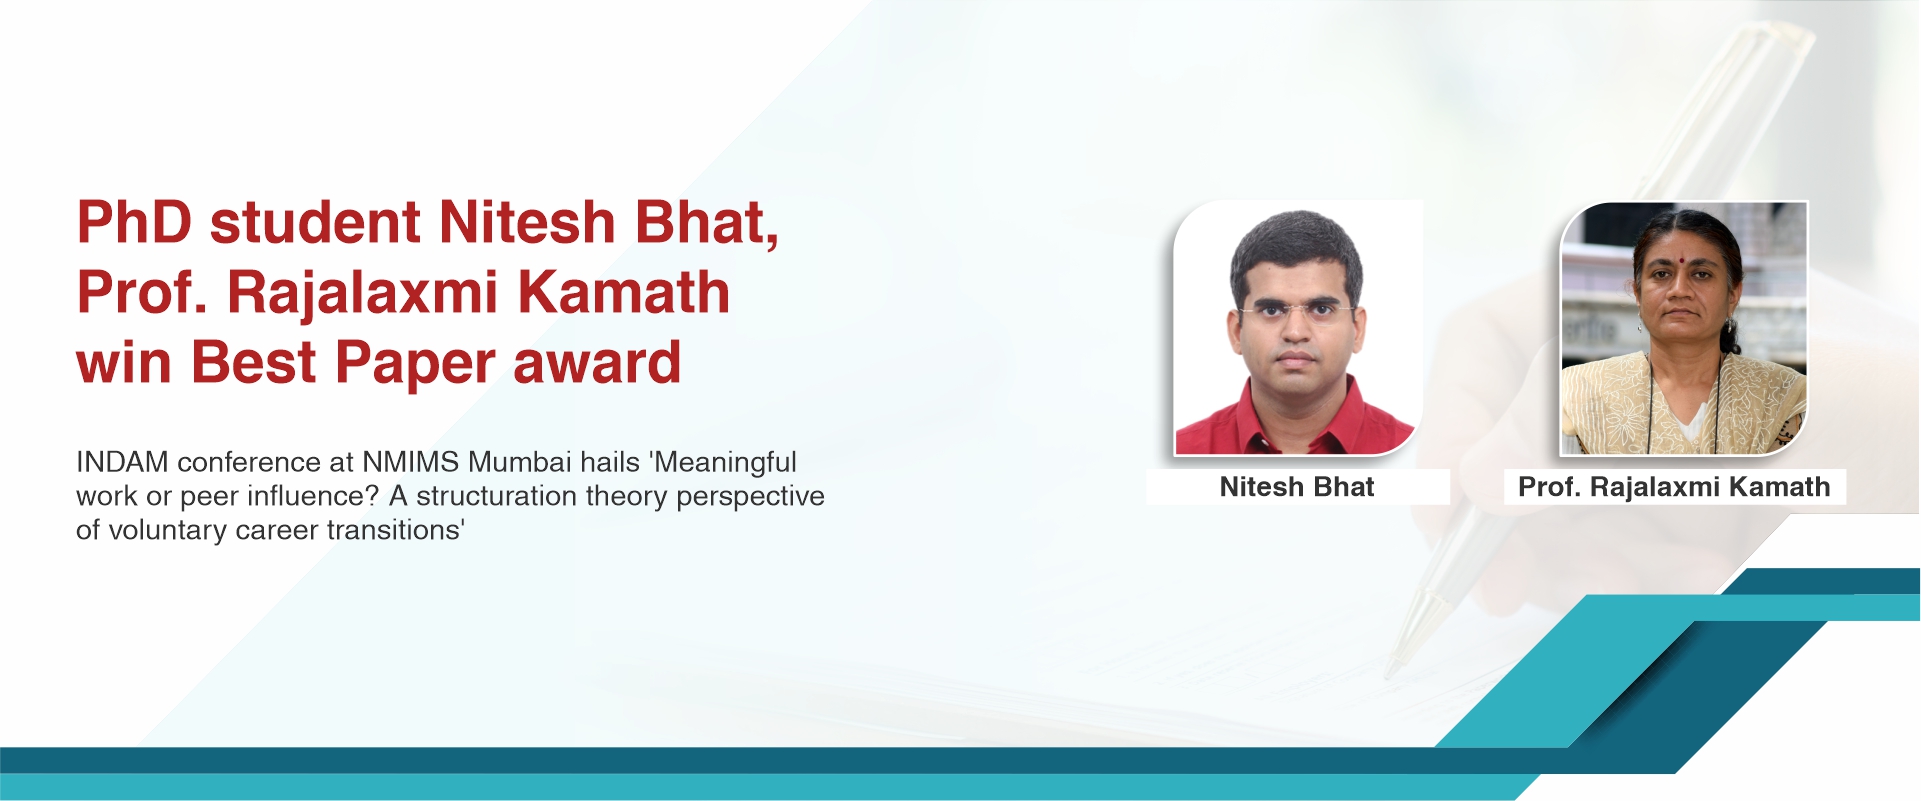 PhD student Nitesh Bhat, Prof. Rajalaxmi Kamath win Best Paper award